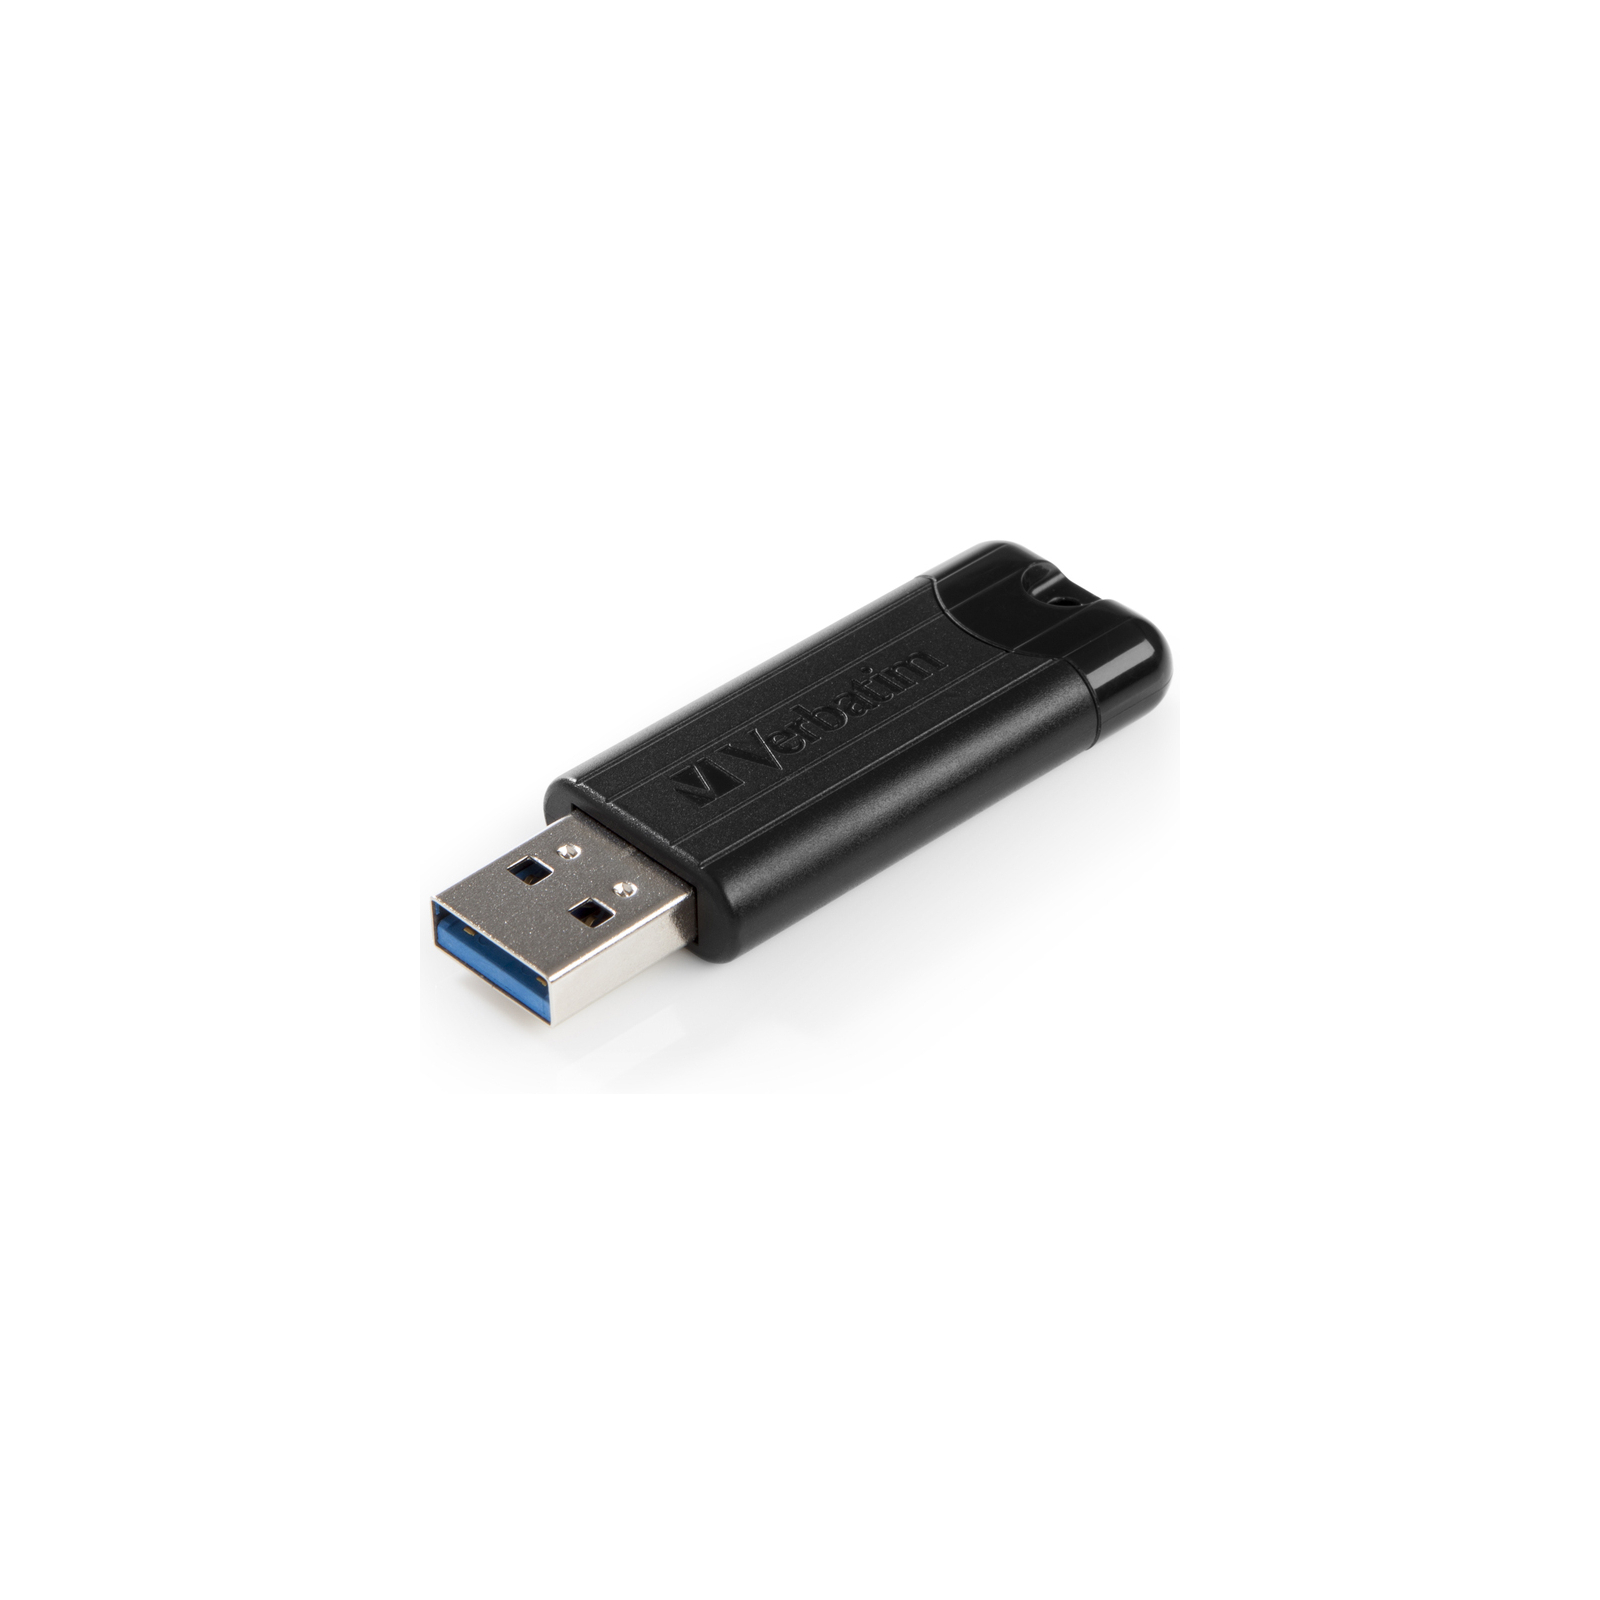 USB флеш накопитель Verbatim 32GB PinStripe Black USB 3.0 (49317) изображение 4